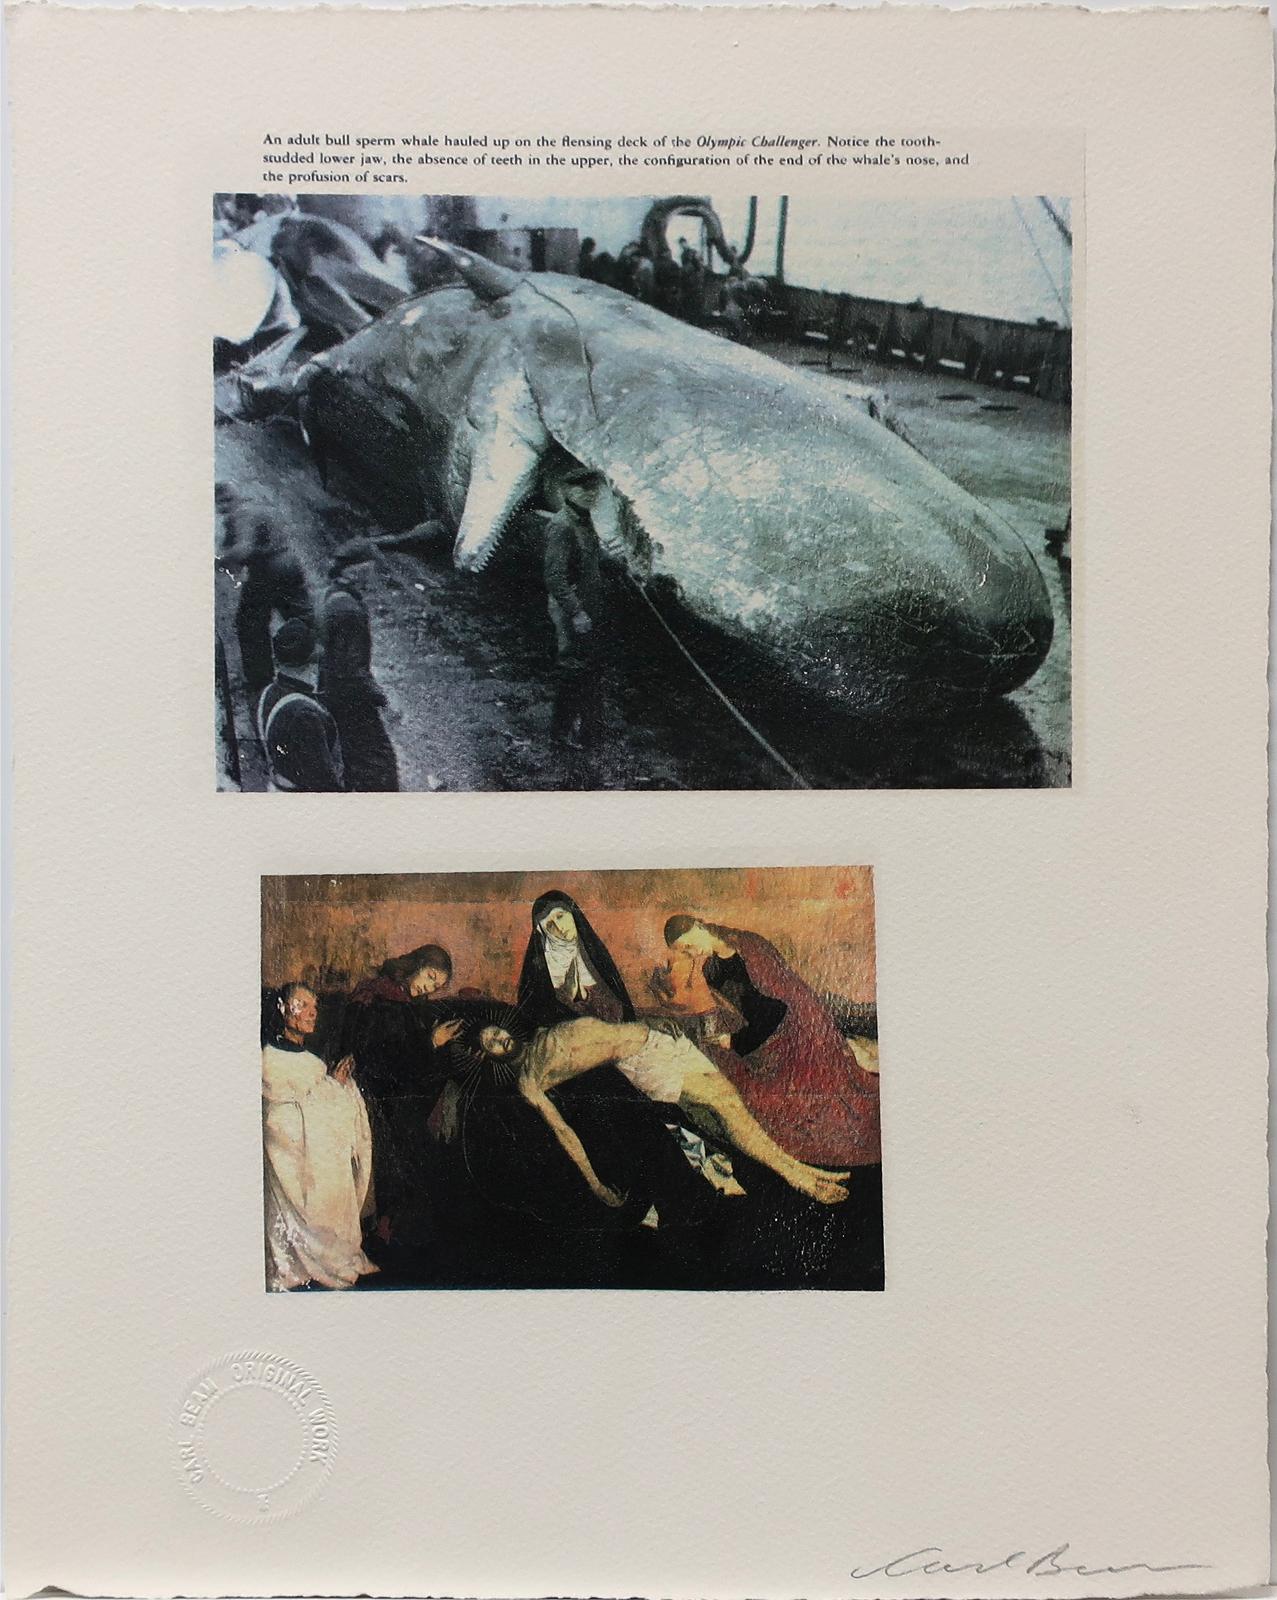 Carl Beam (1943-2005) - Untitled (Adult Sperm Bull Whale-Christ)